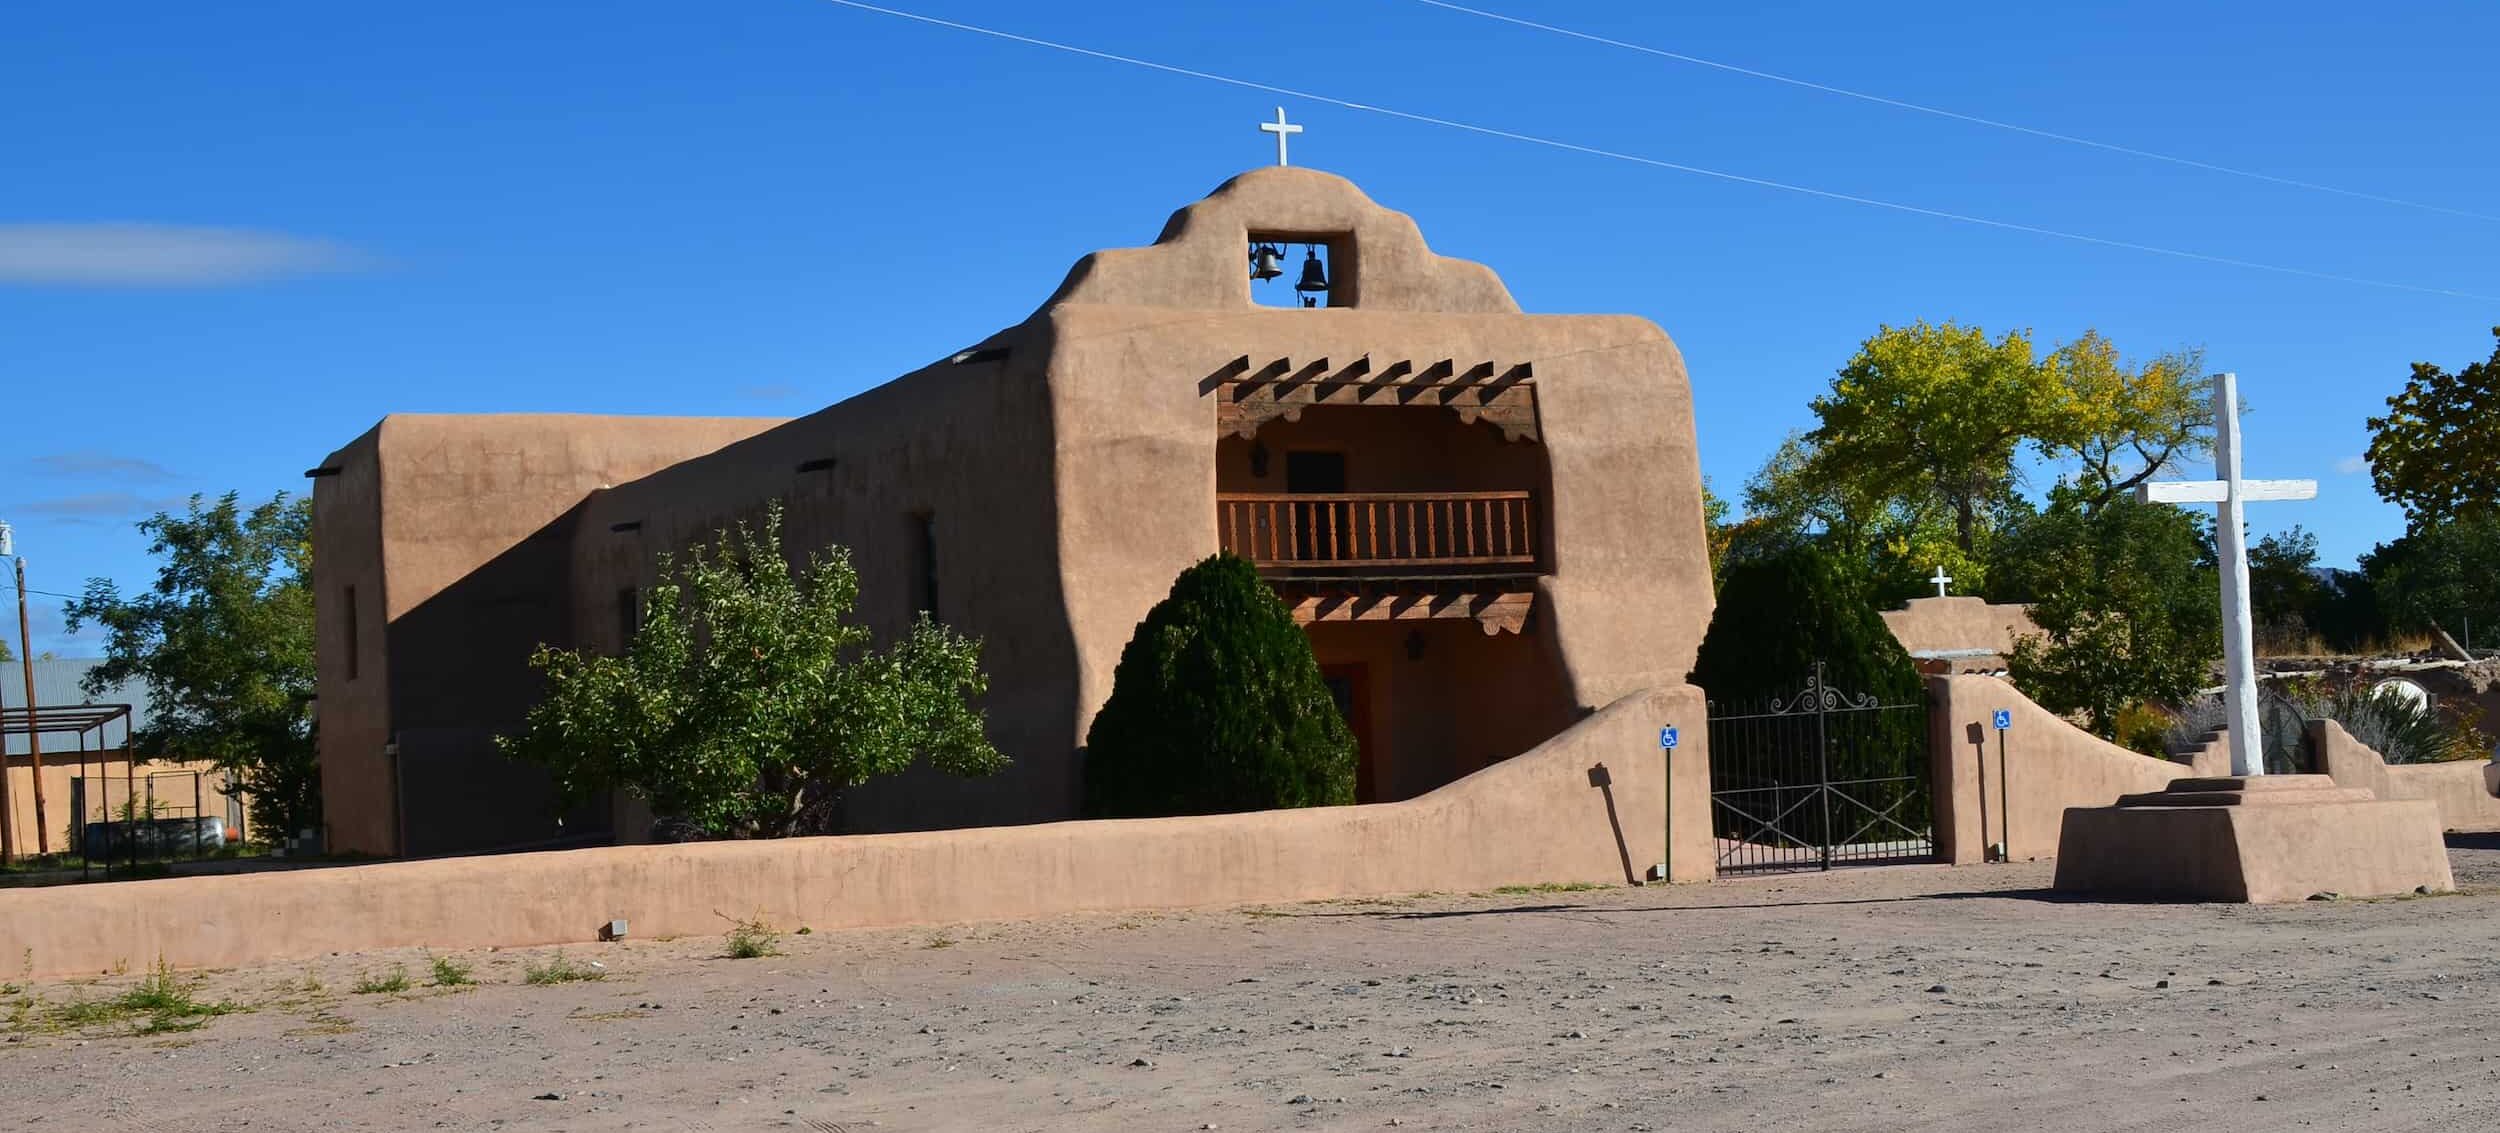 St. Thomas the Apostle Catholic Church in Abiquiu, New Mexico